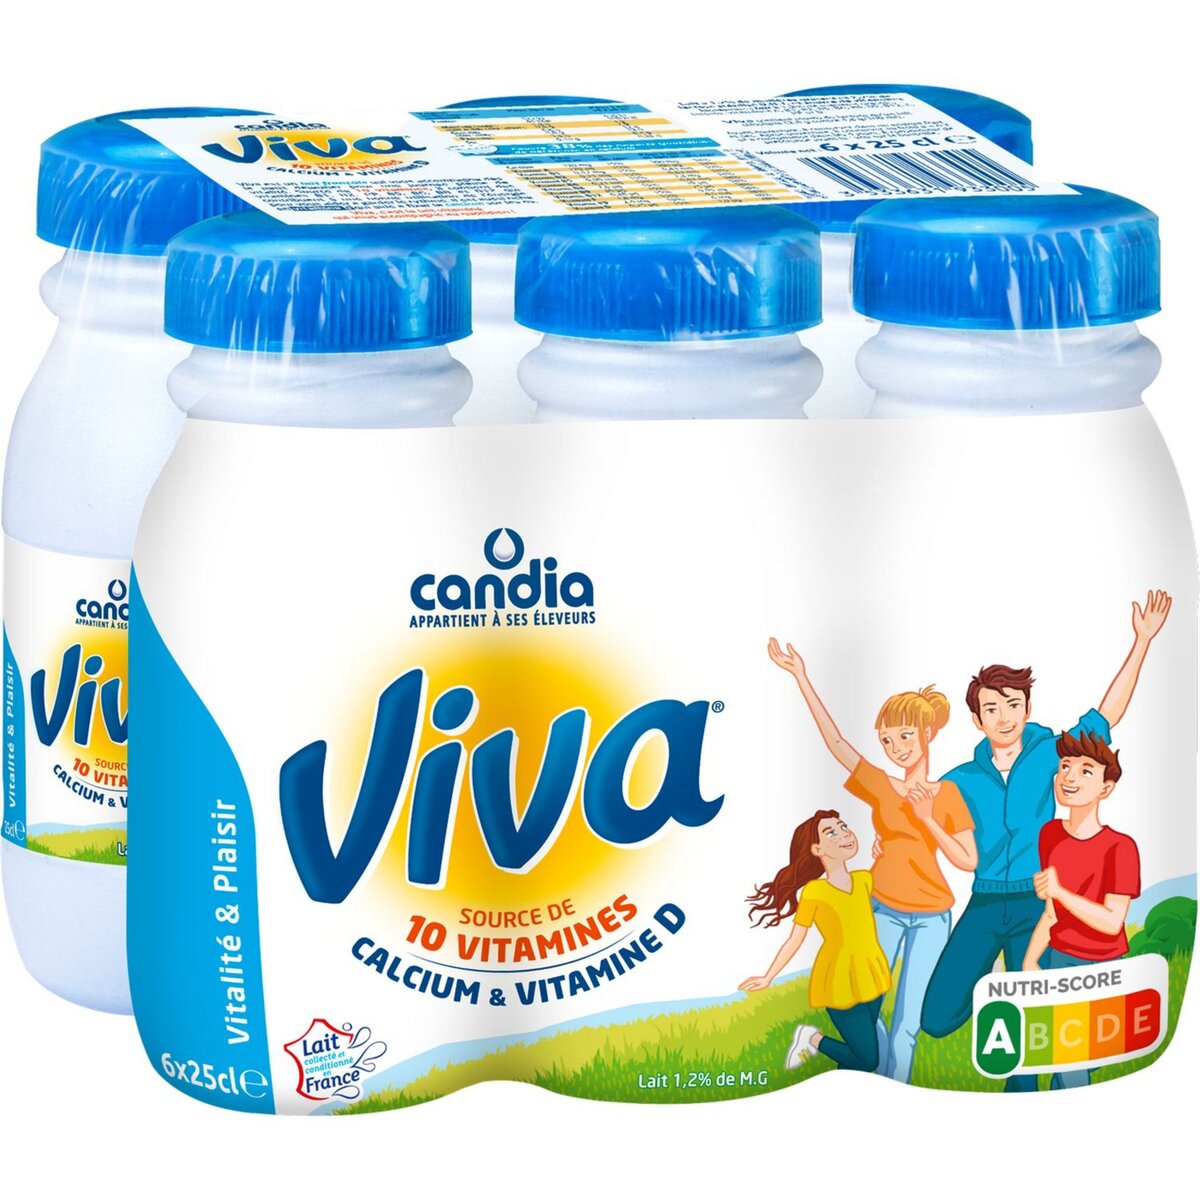 CANDIA Candia Viva lait uht vitaminé 6x25cl